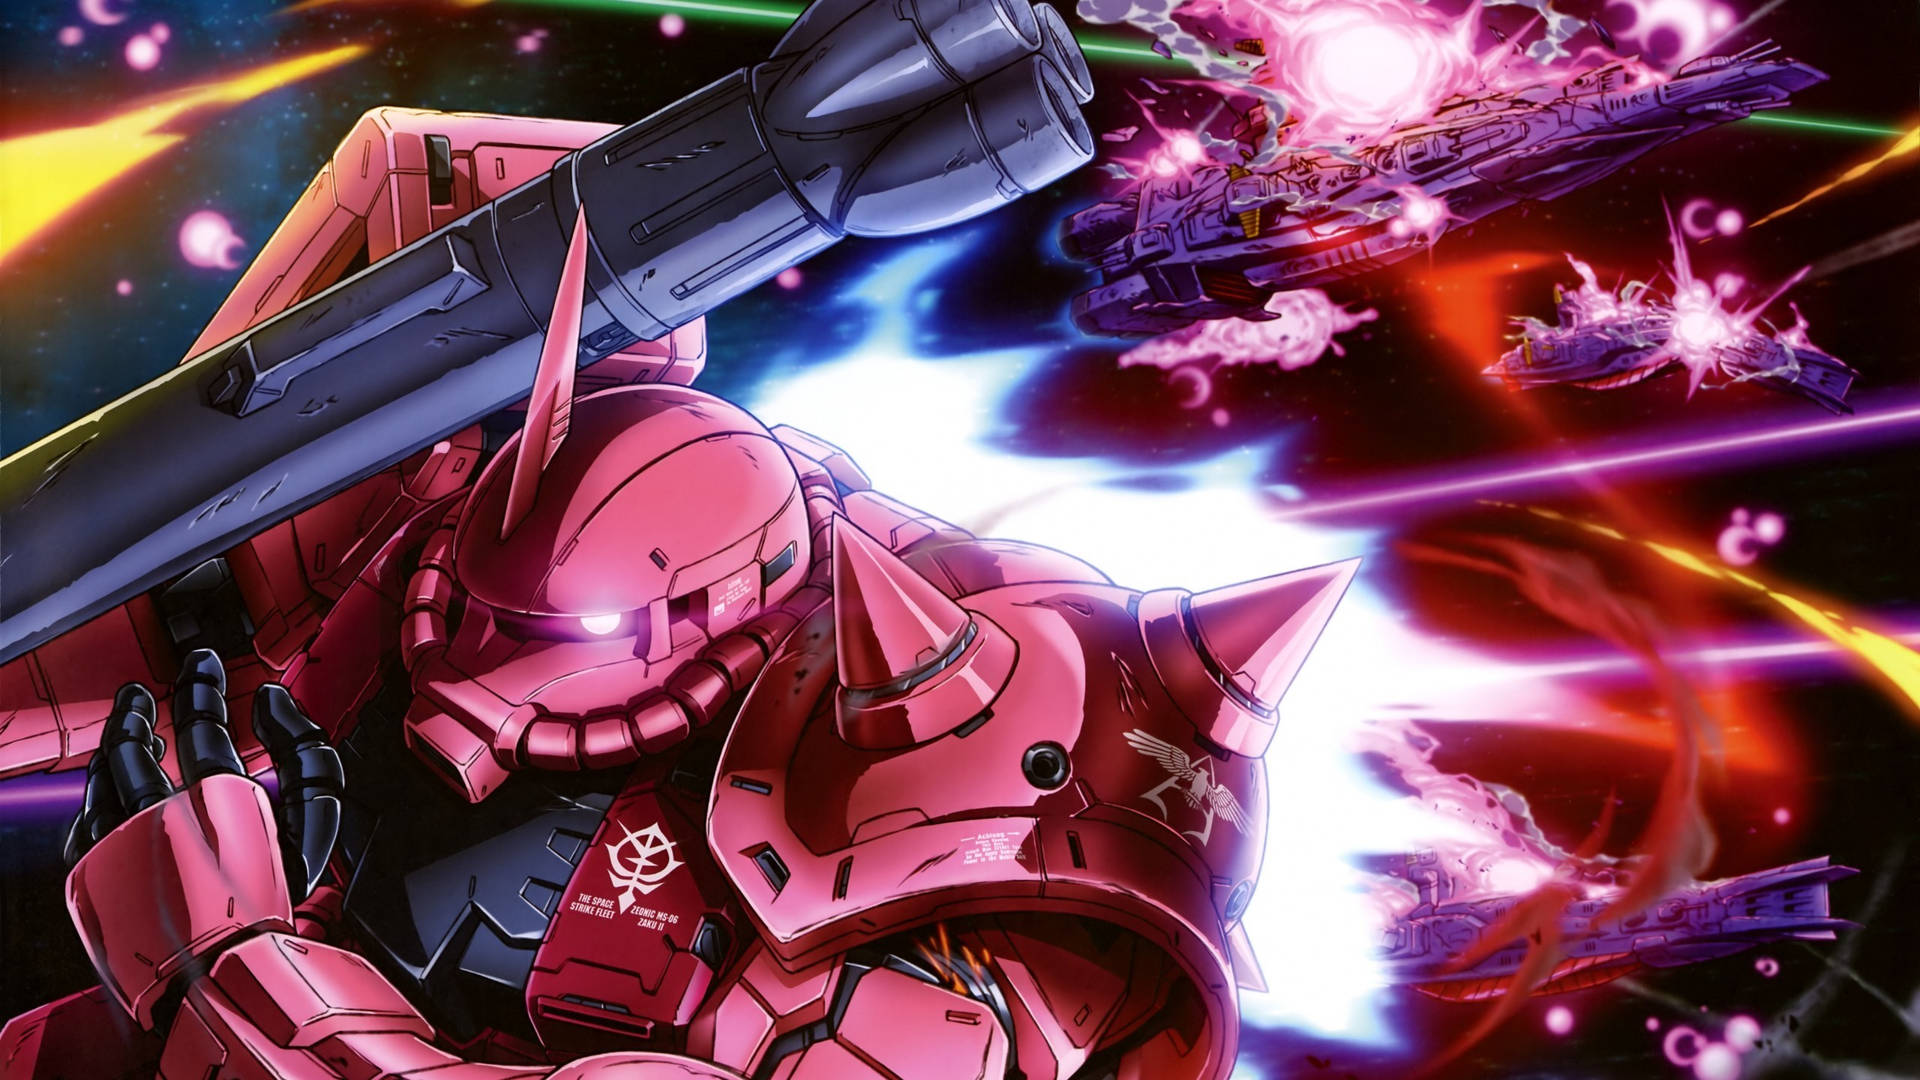 Mobile Suit Gundam A Carrying Rocket